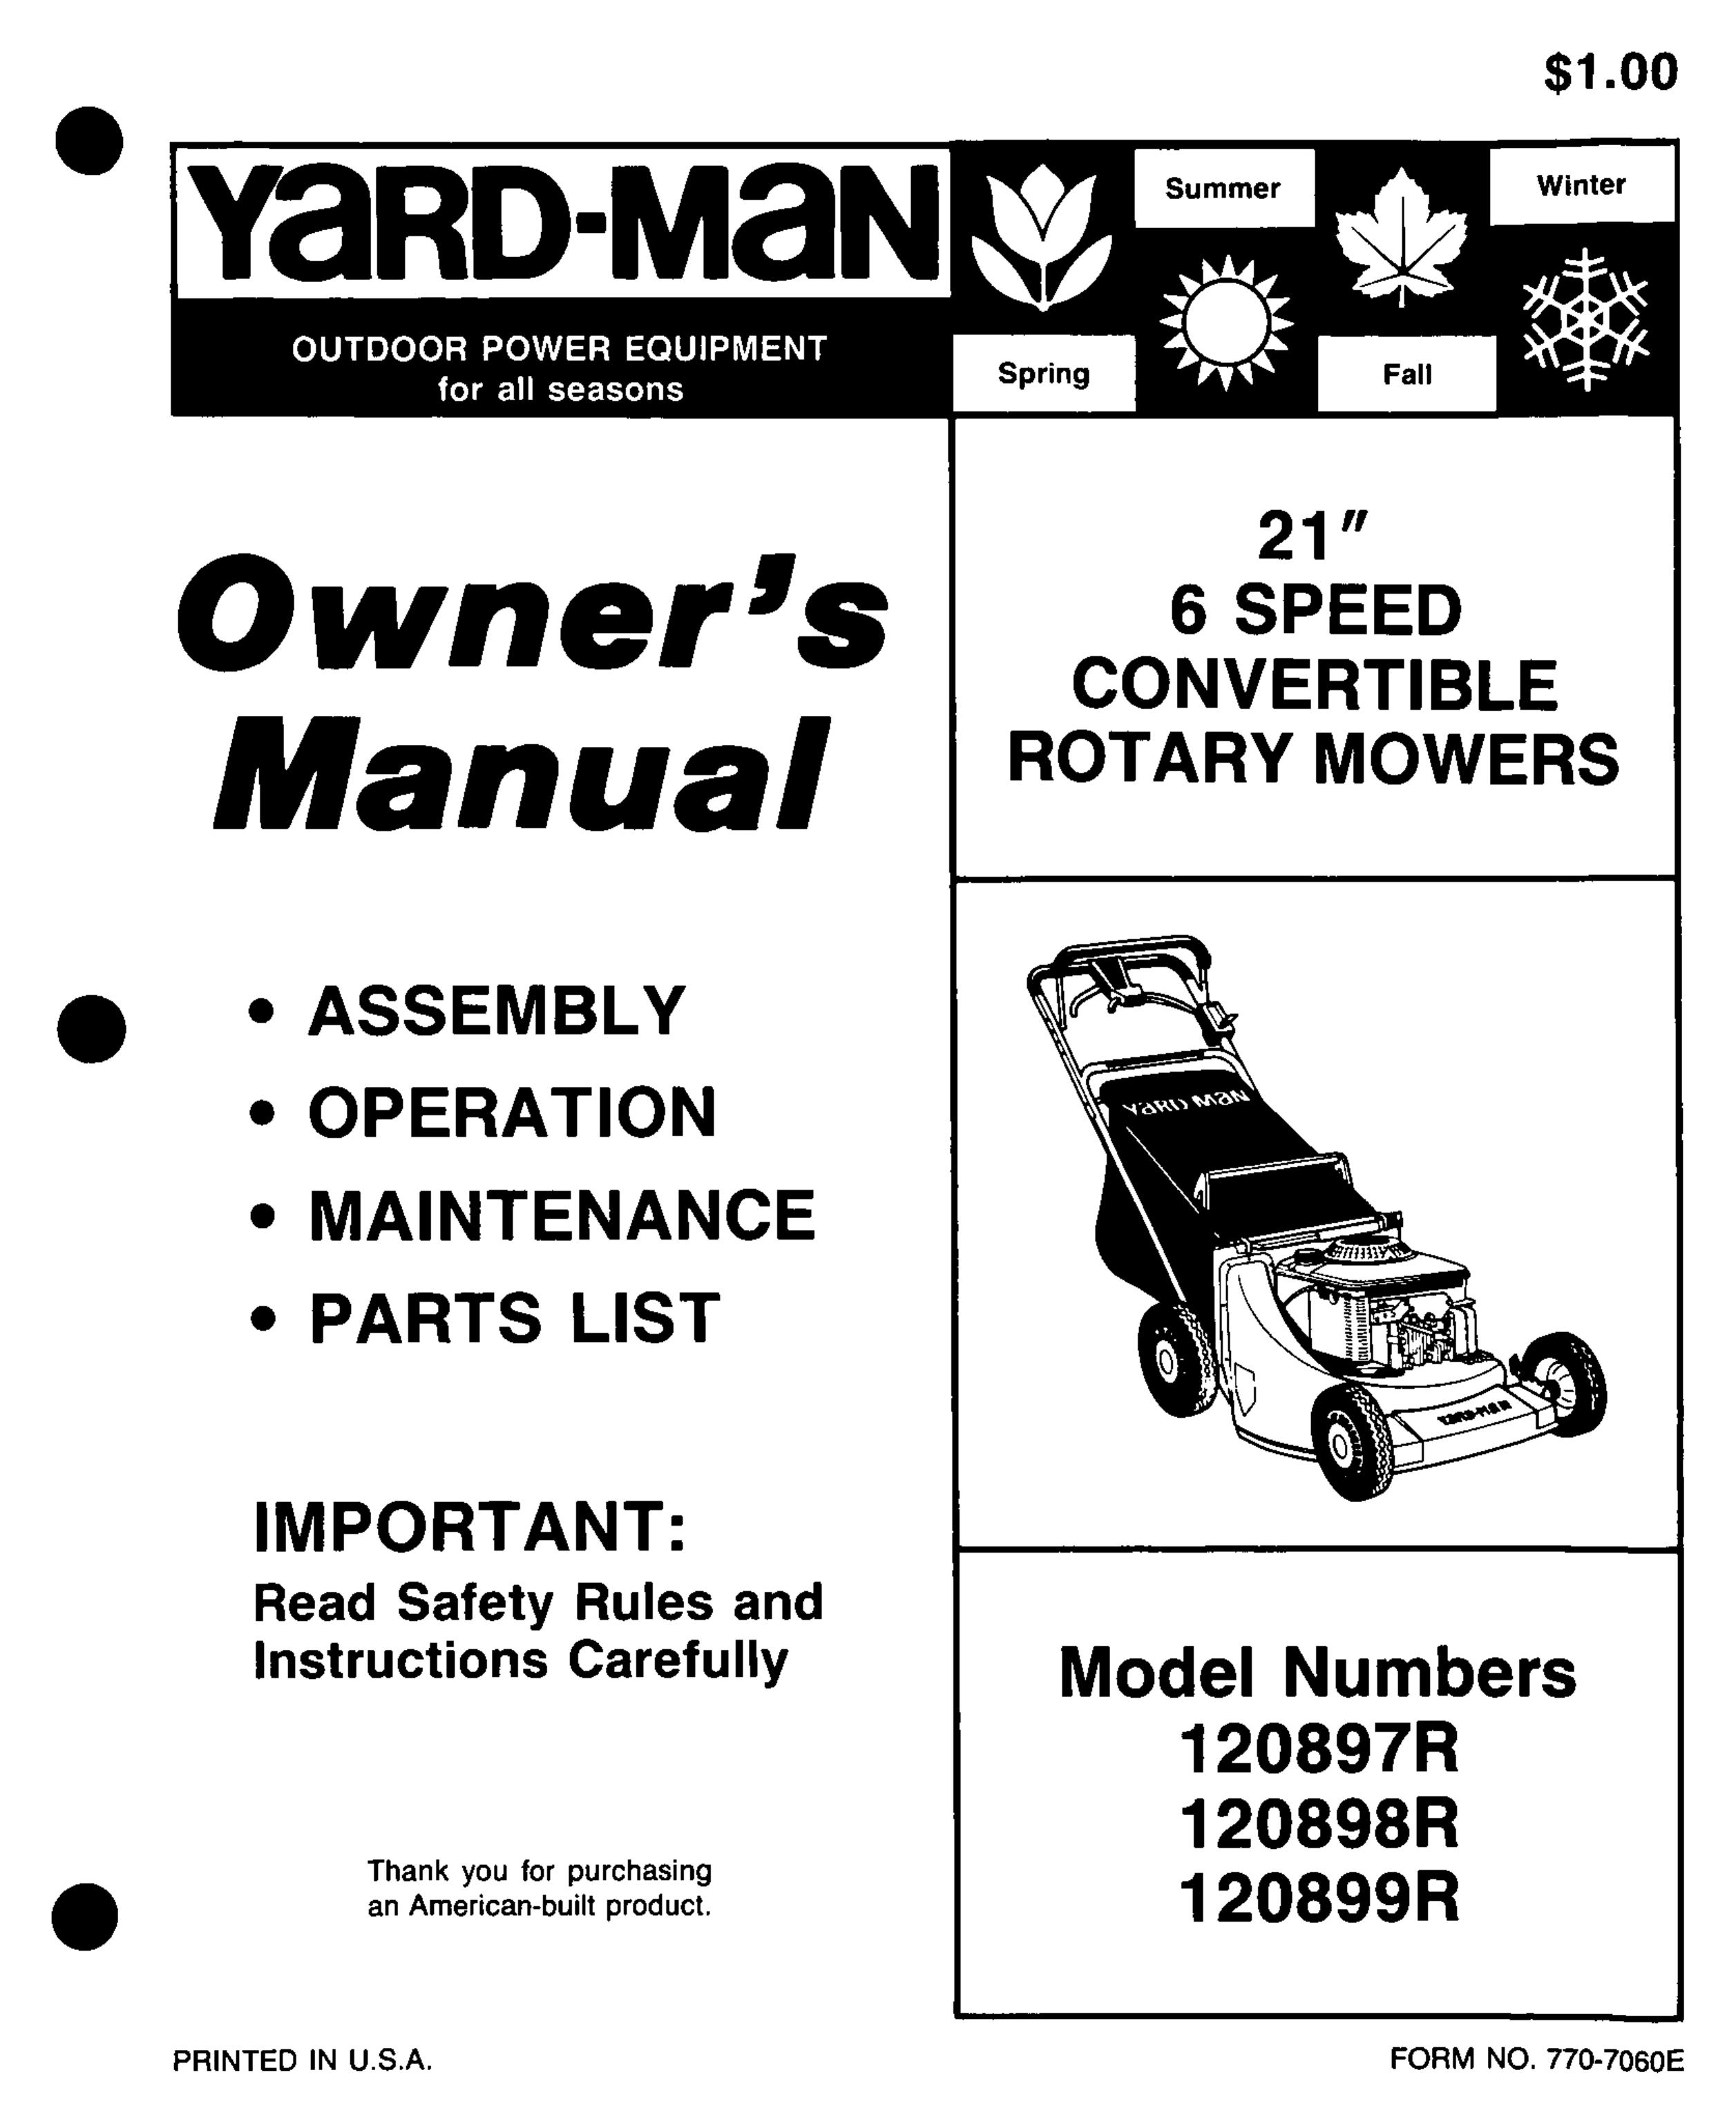 Yard-Man 120898R Lawn Mower User Manual